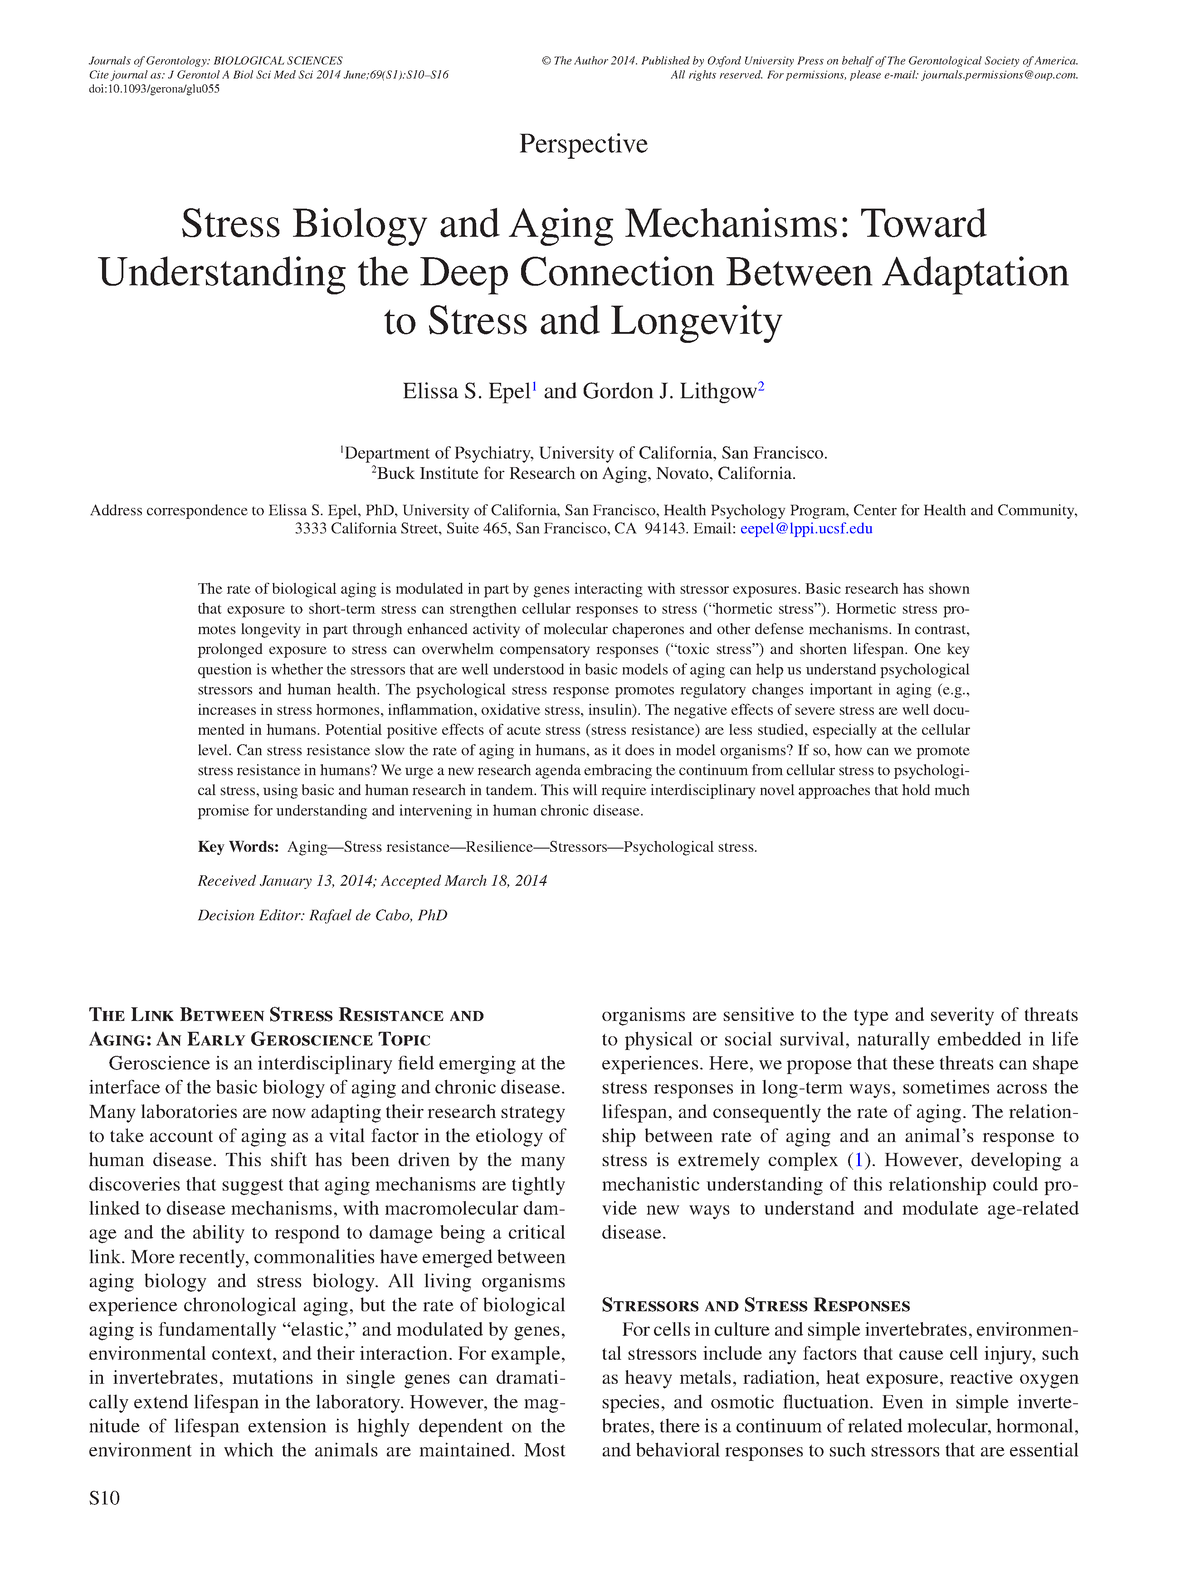 Stress Biology and Aging Mechanisms Journals of Gerontology